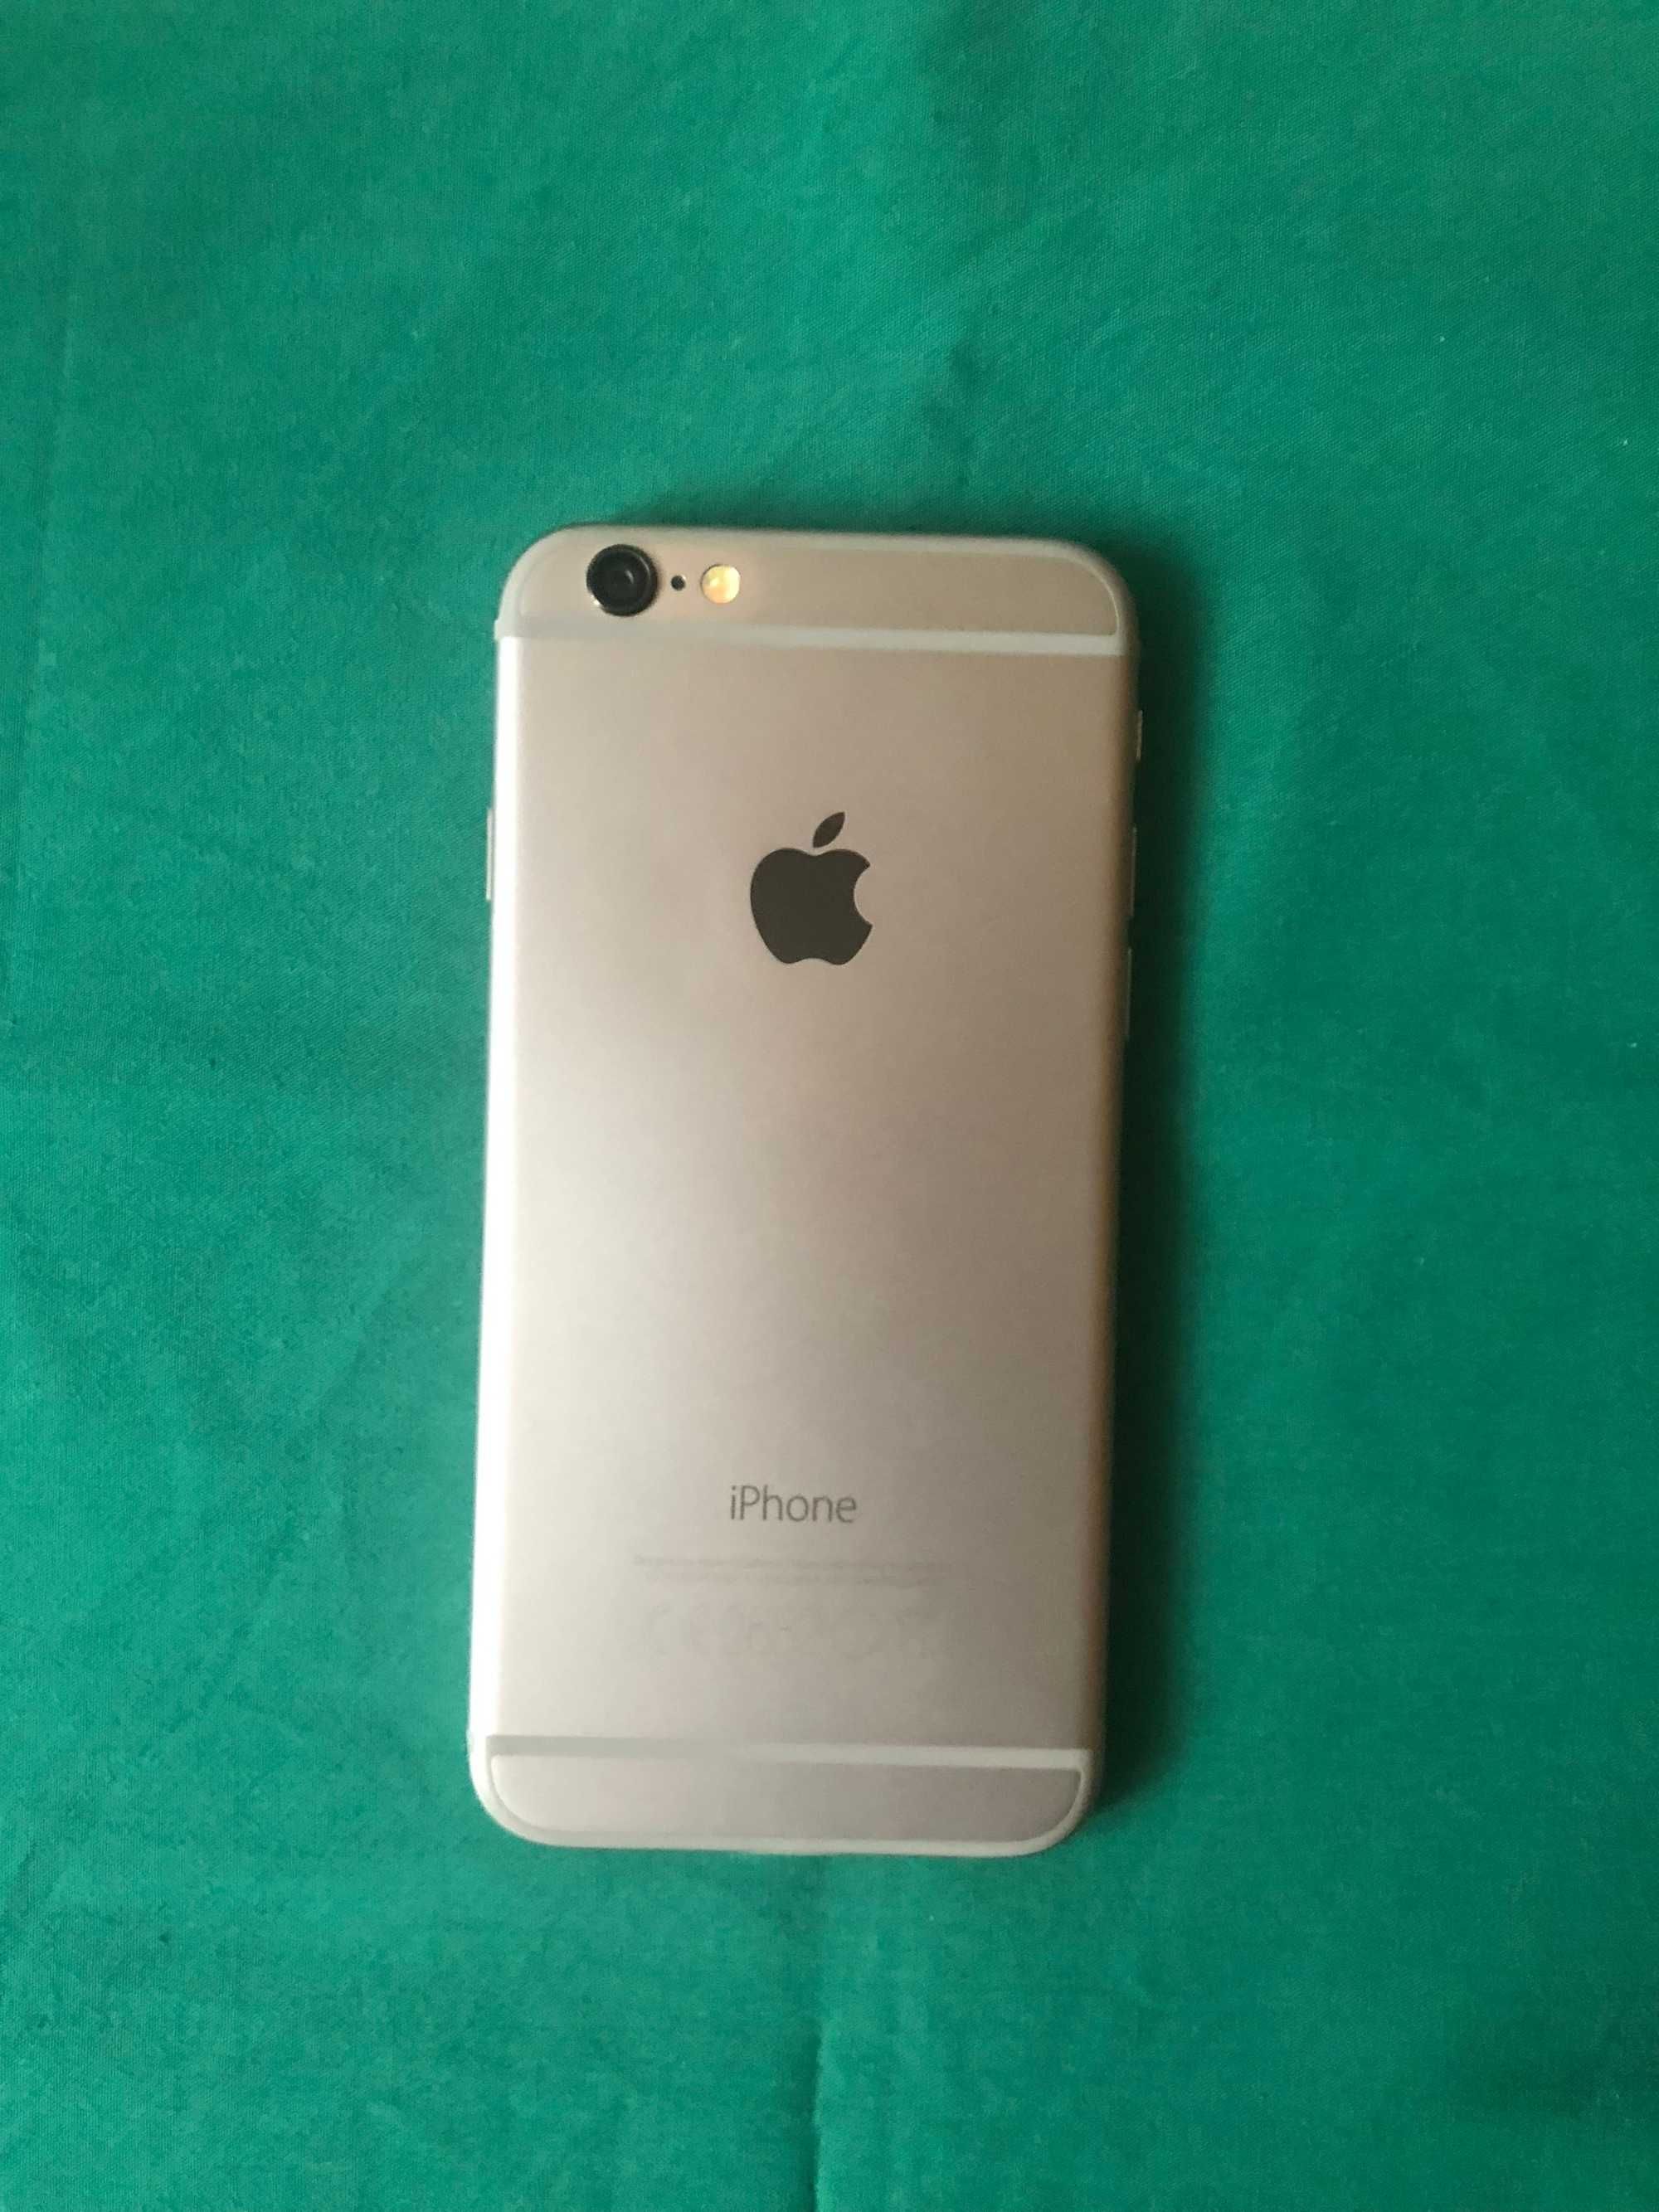 Apple iPhone 6 - Silver, 64GB